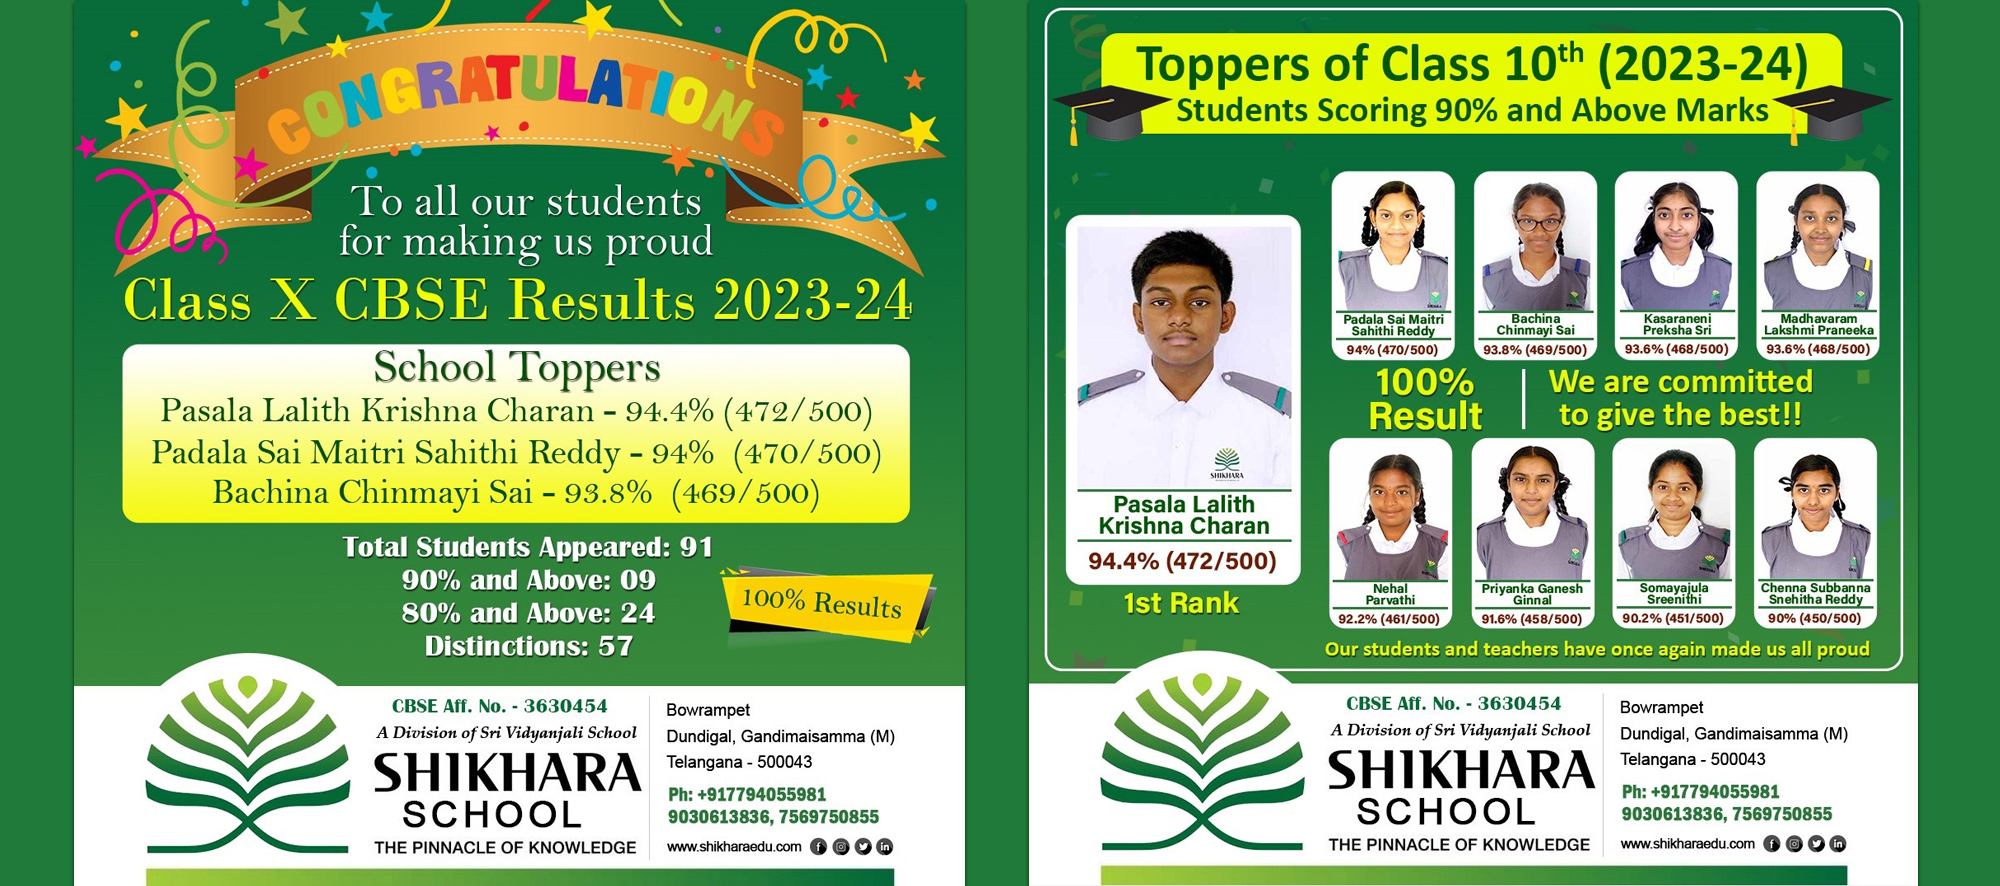 shikhara school bowrampet studentimage Second slide